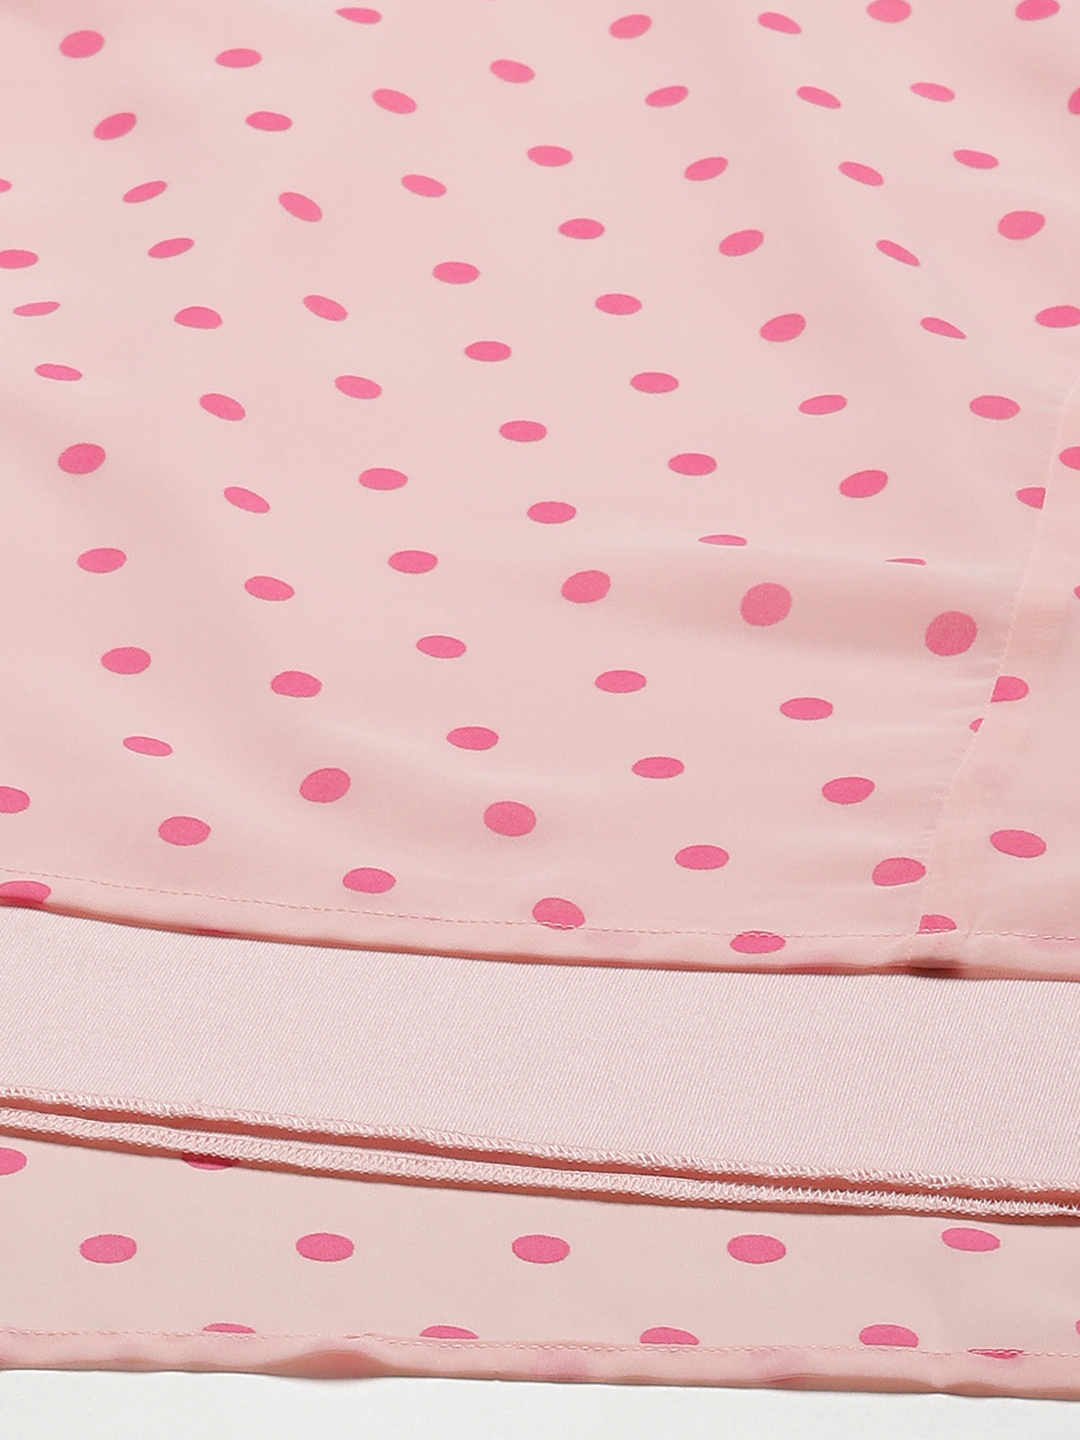 Women Pink With Fuchsia Polka Dot Maxi Skirt